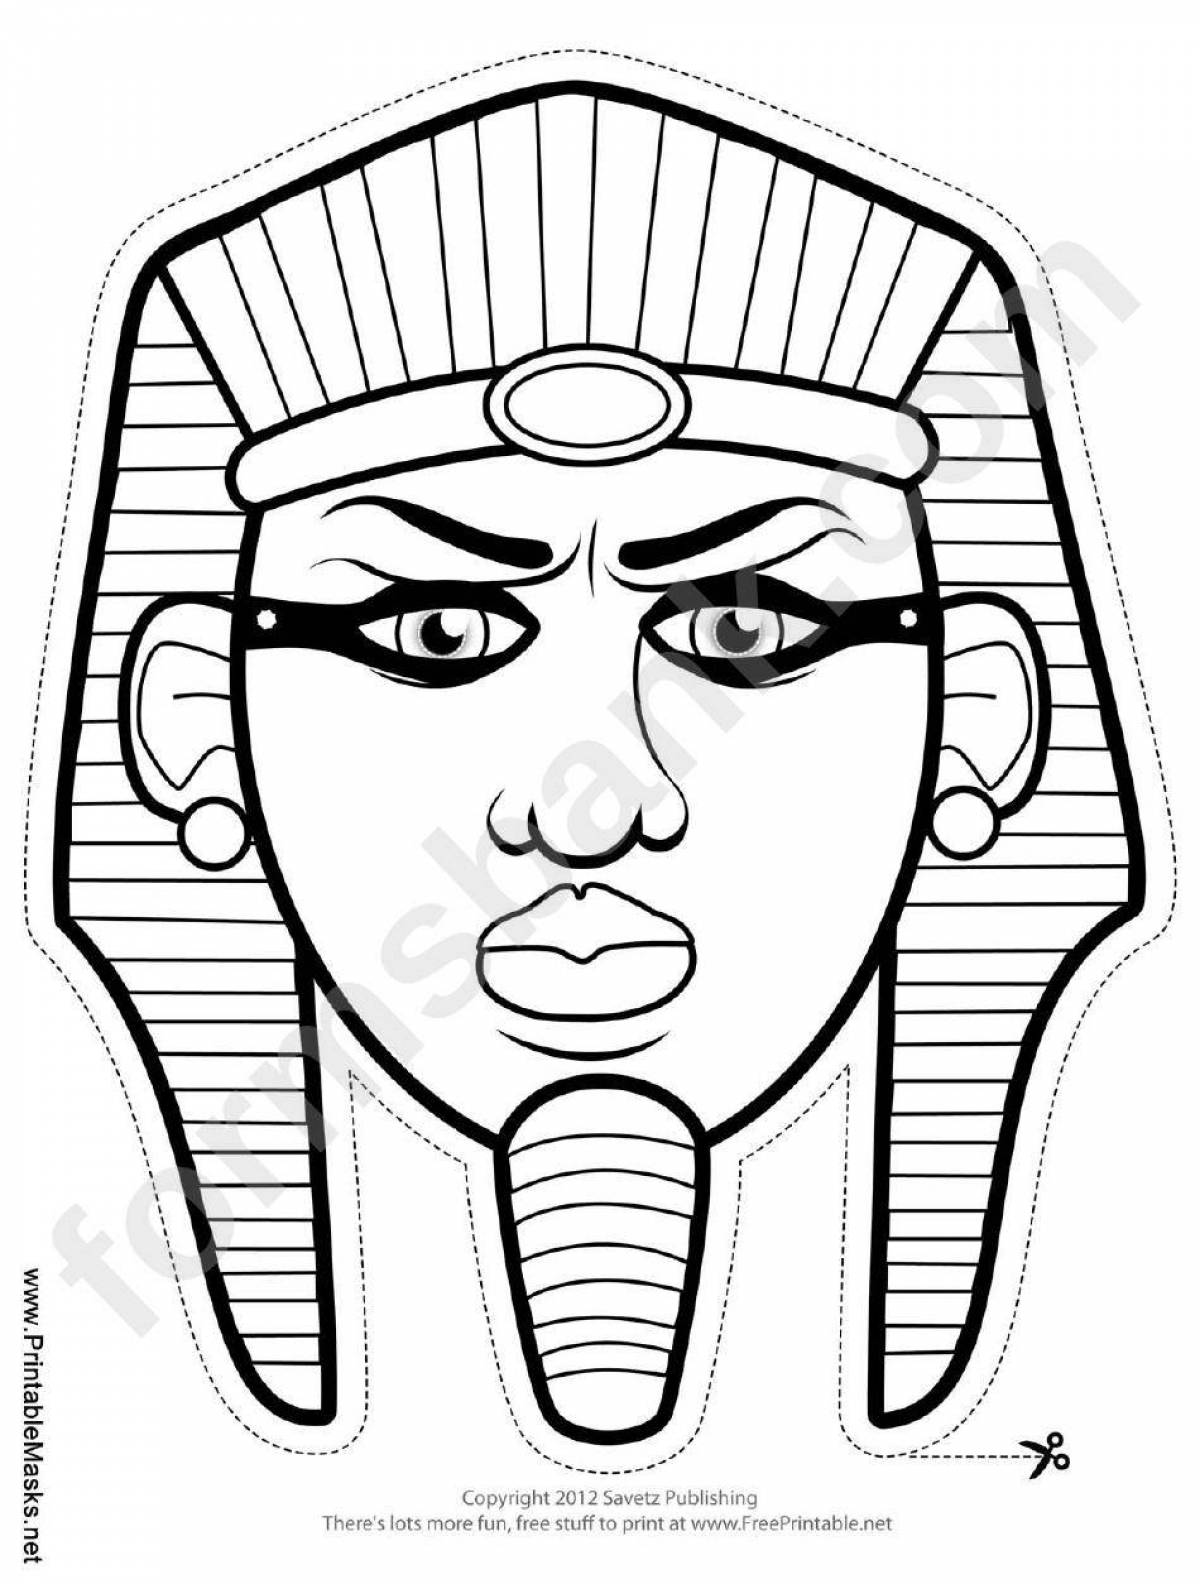 Coloring page decorated mask of Pharaoh Tutankhamun